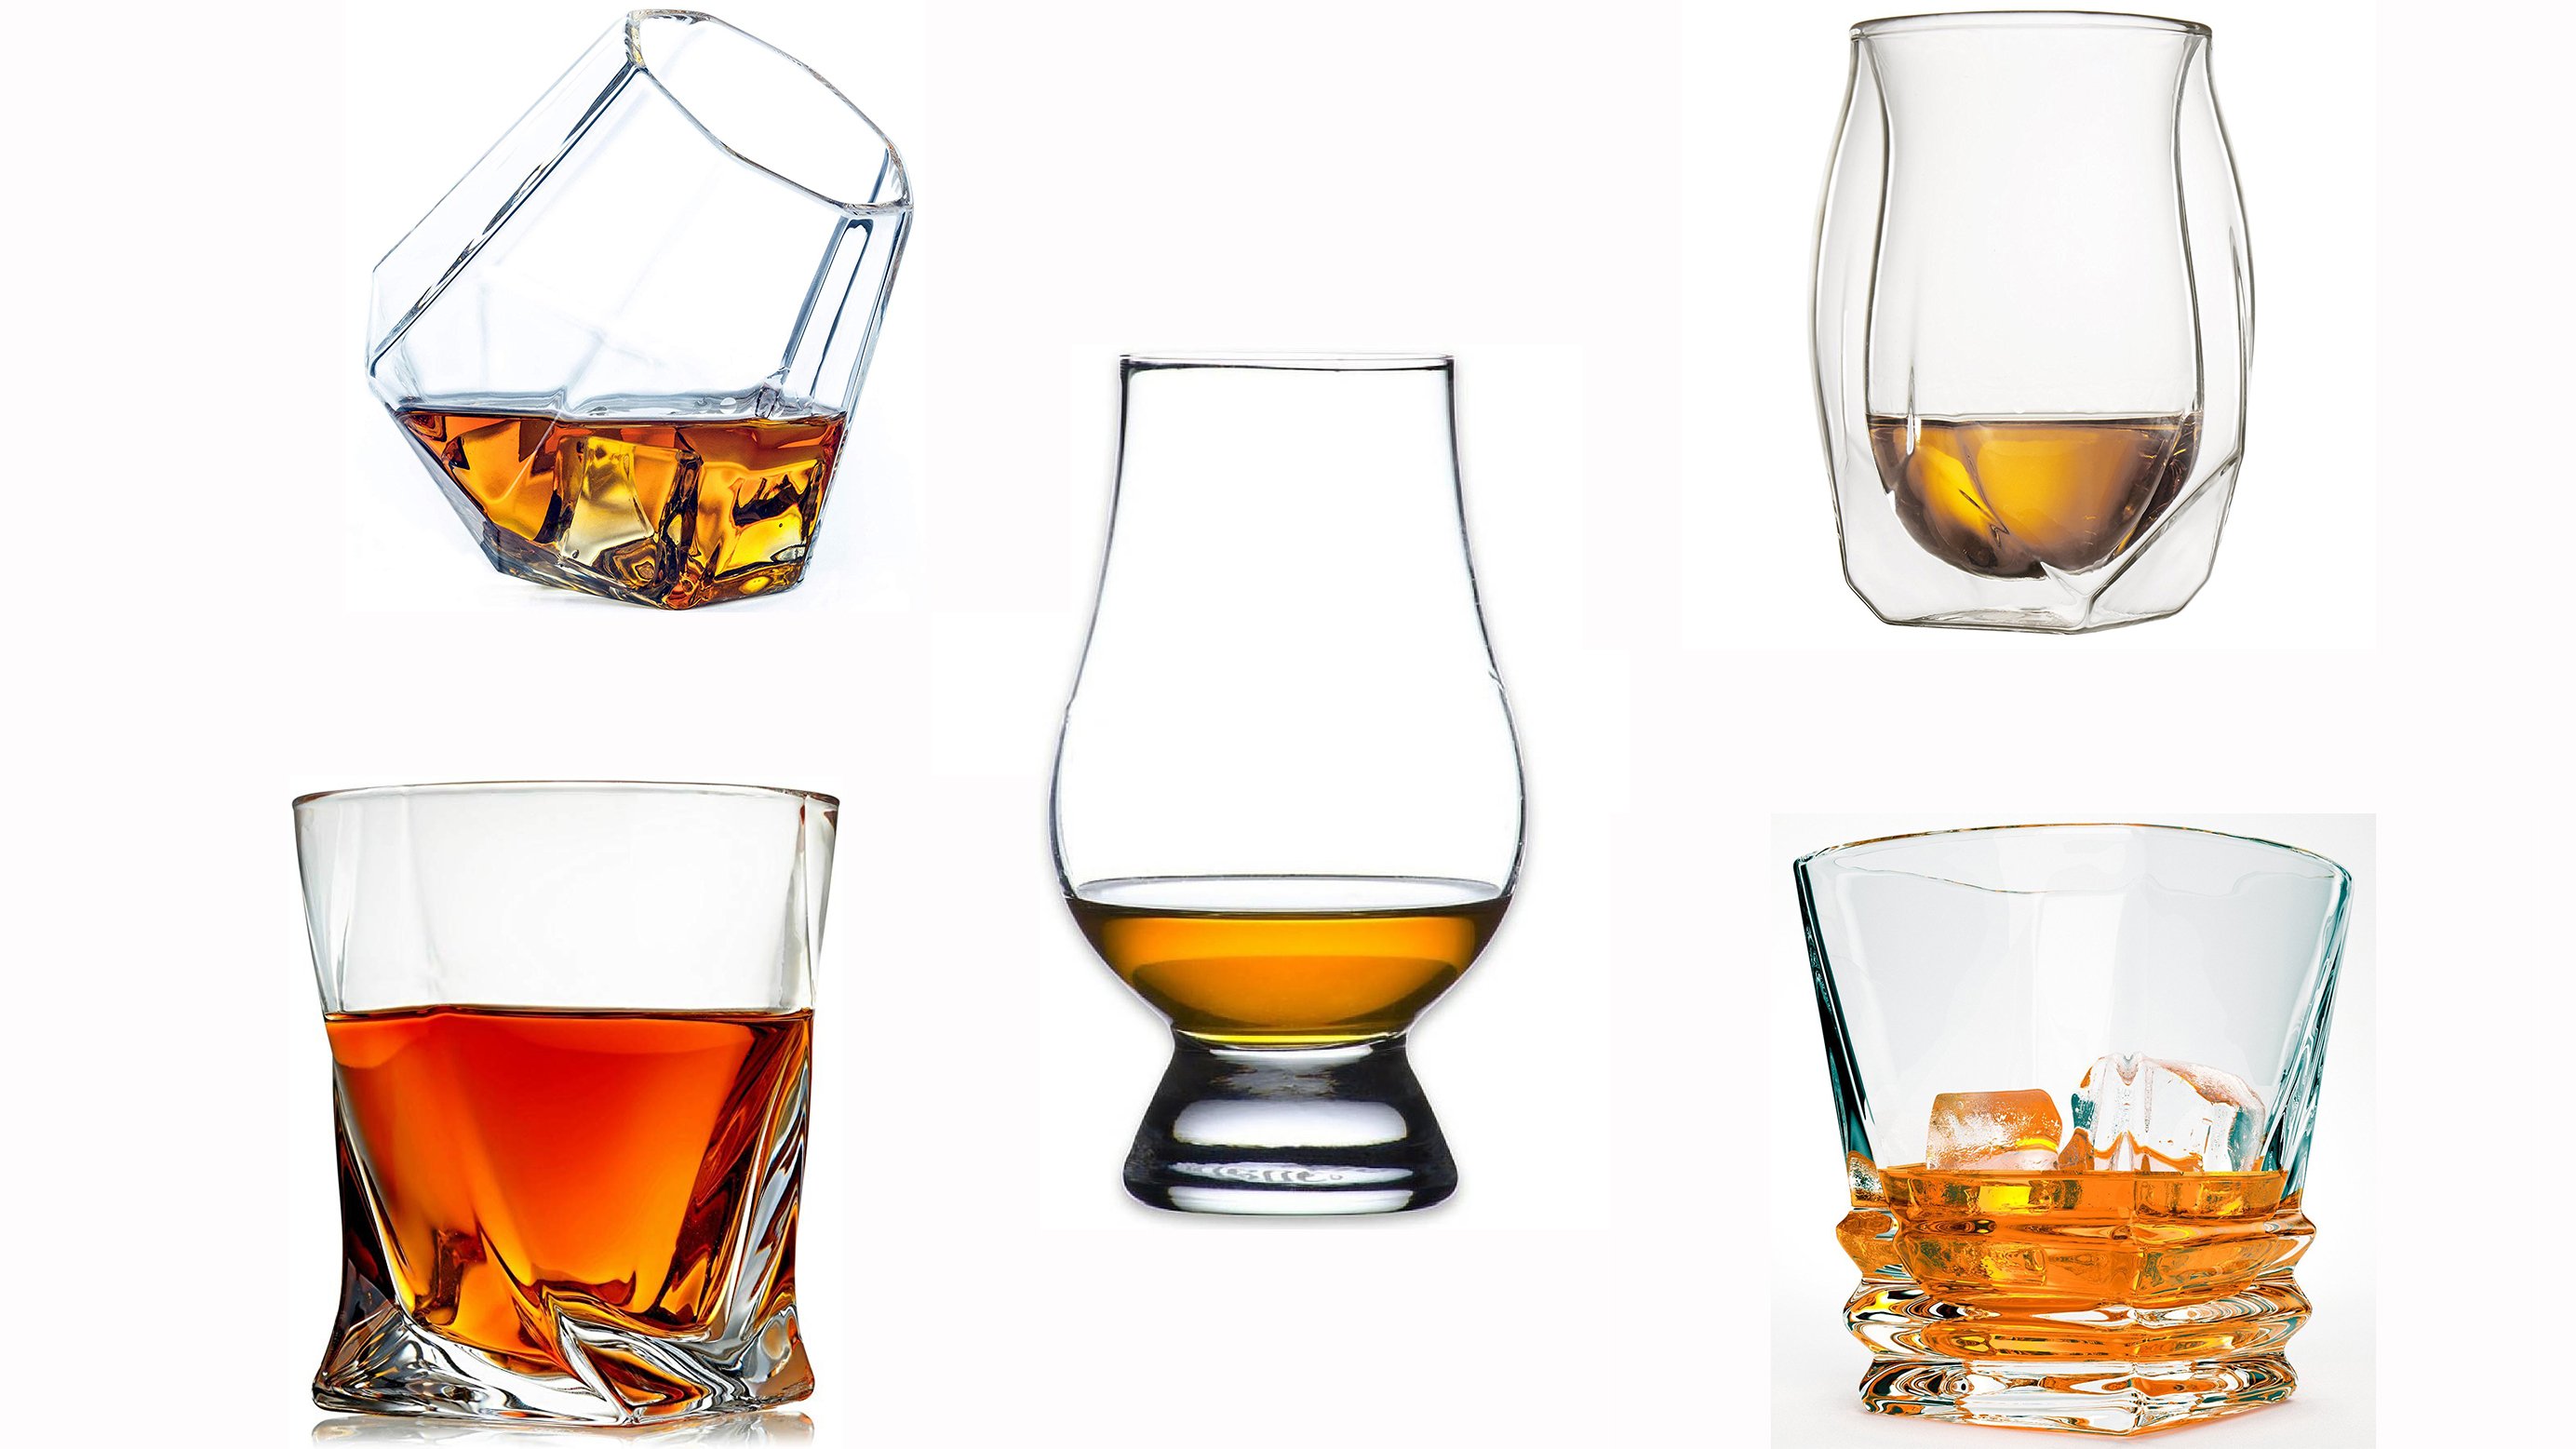 What Whiskey Glass Should I Use - The Pot Still - Whiskey glasses